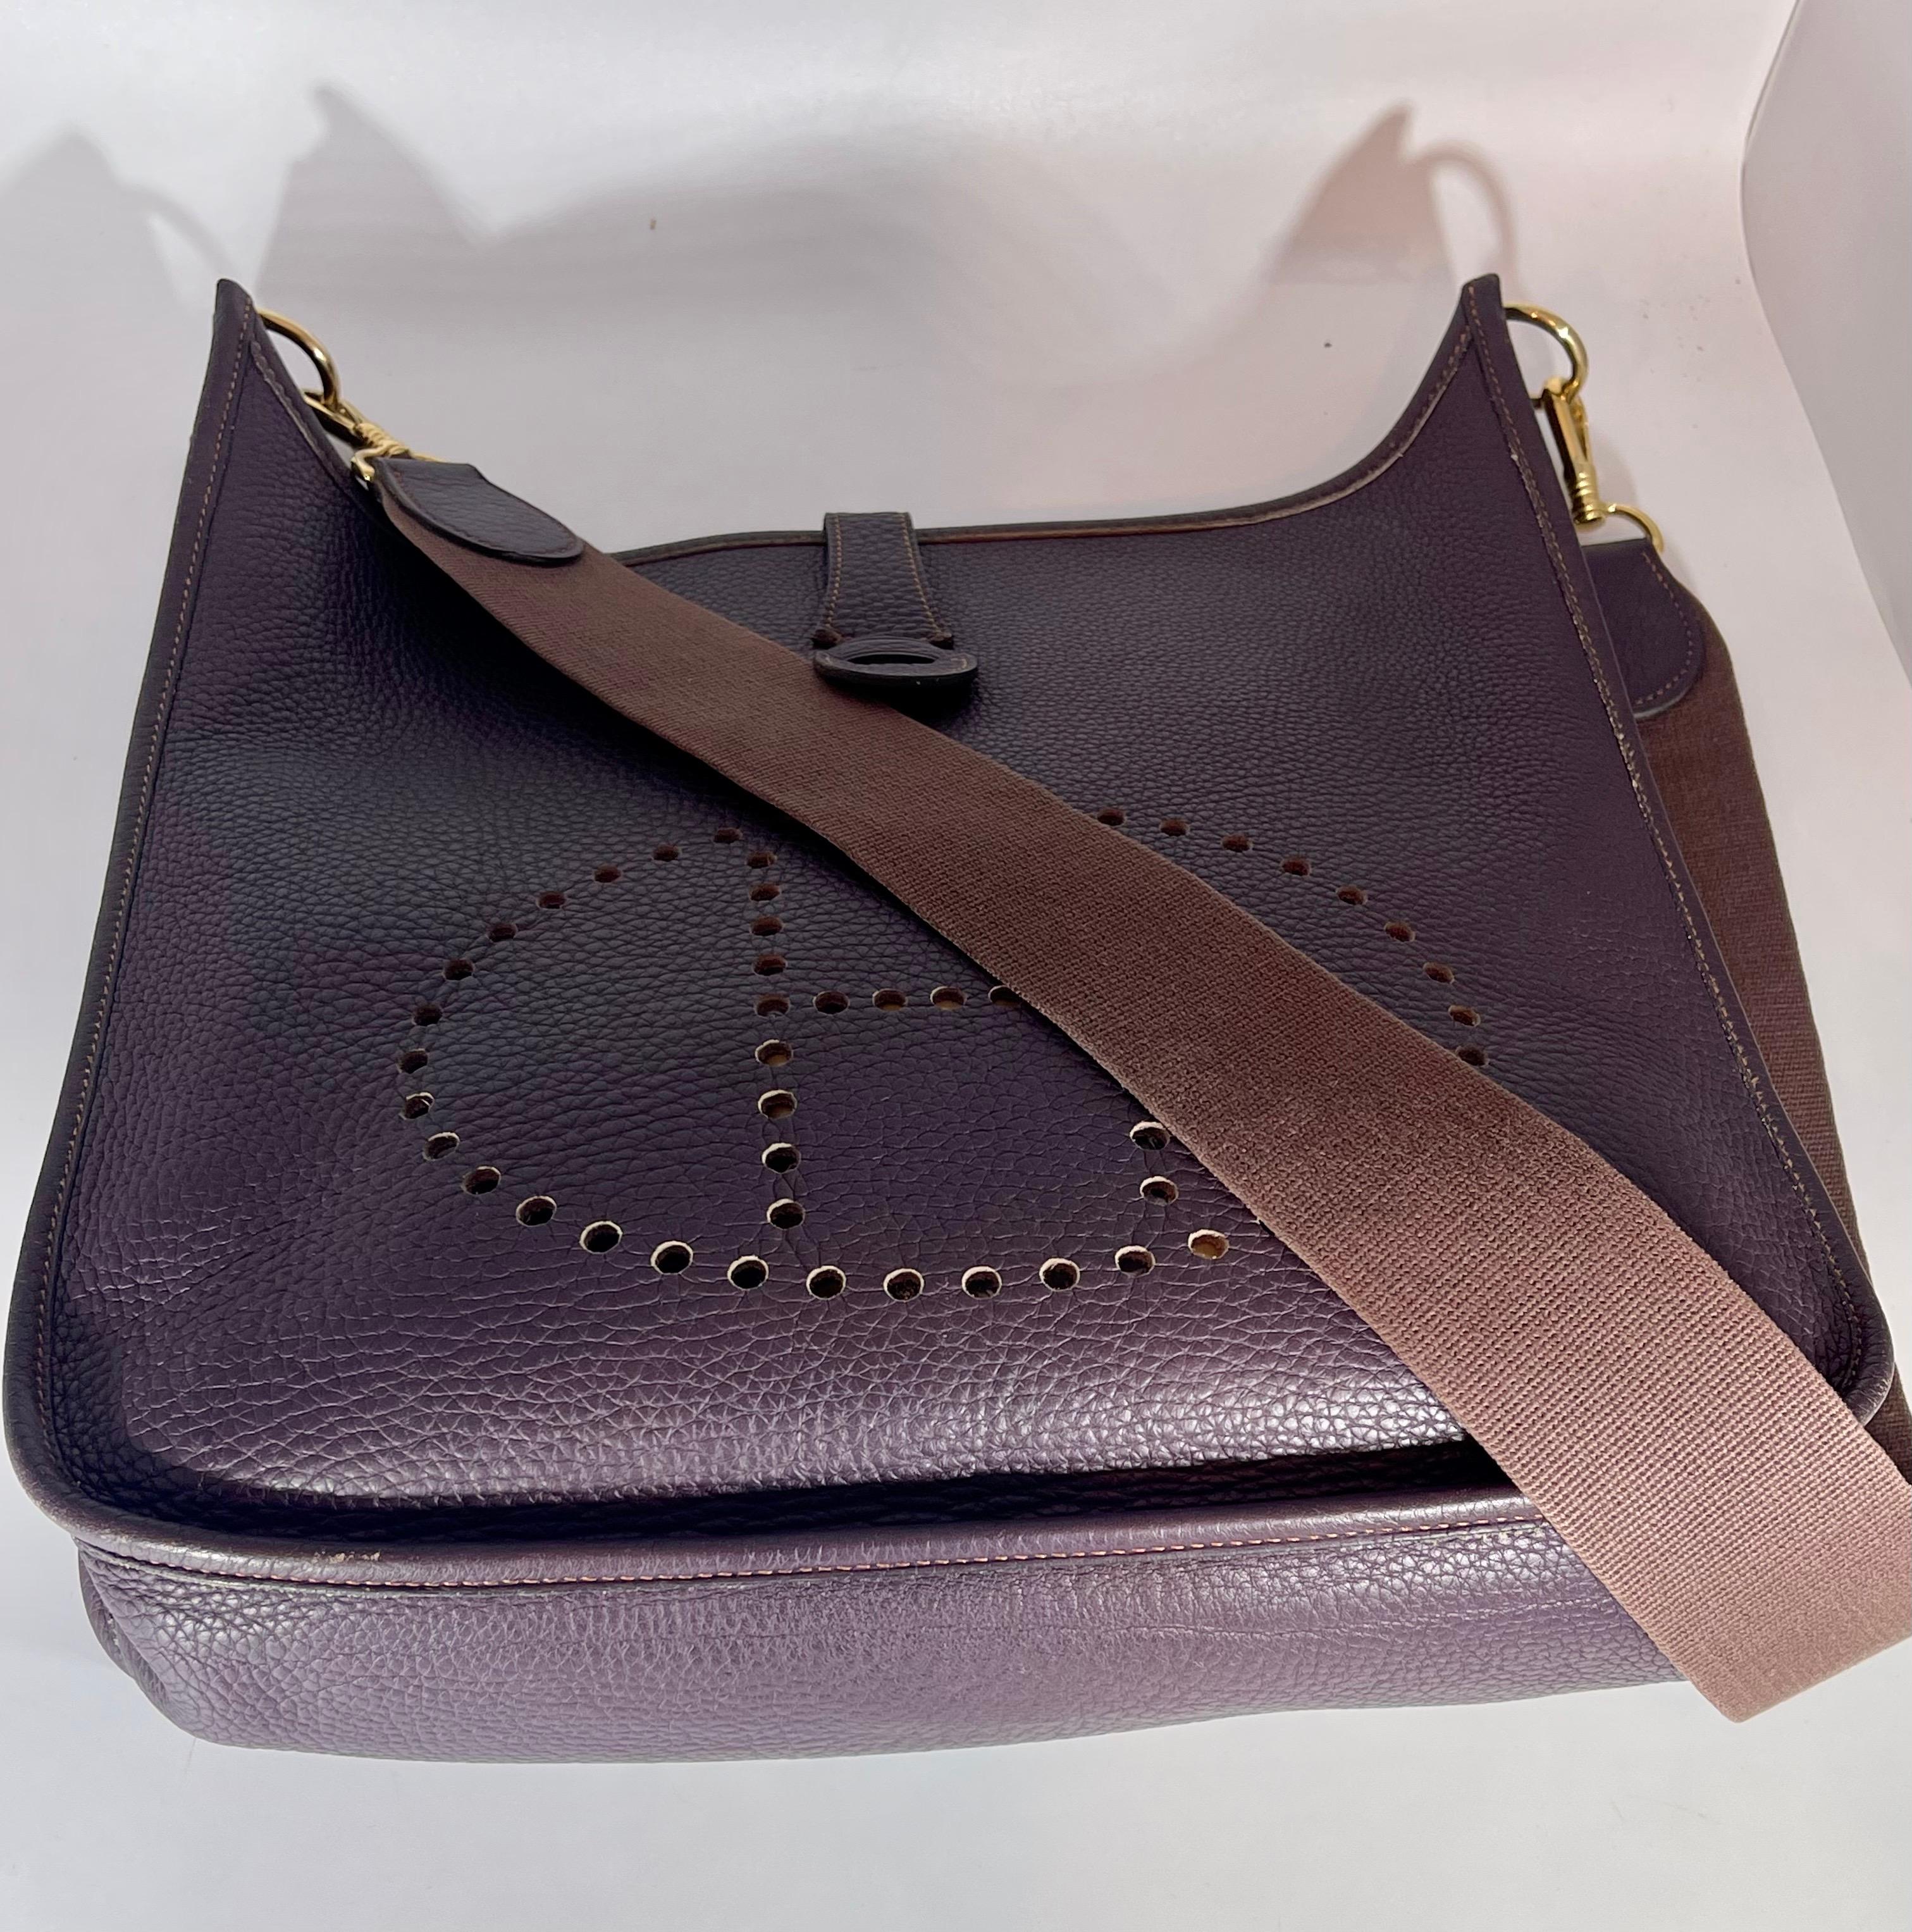 Women's Hermès Evelyne Pm Dark Brown / Chocolate Leather Cross Body Bag Like New For Sale